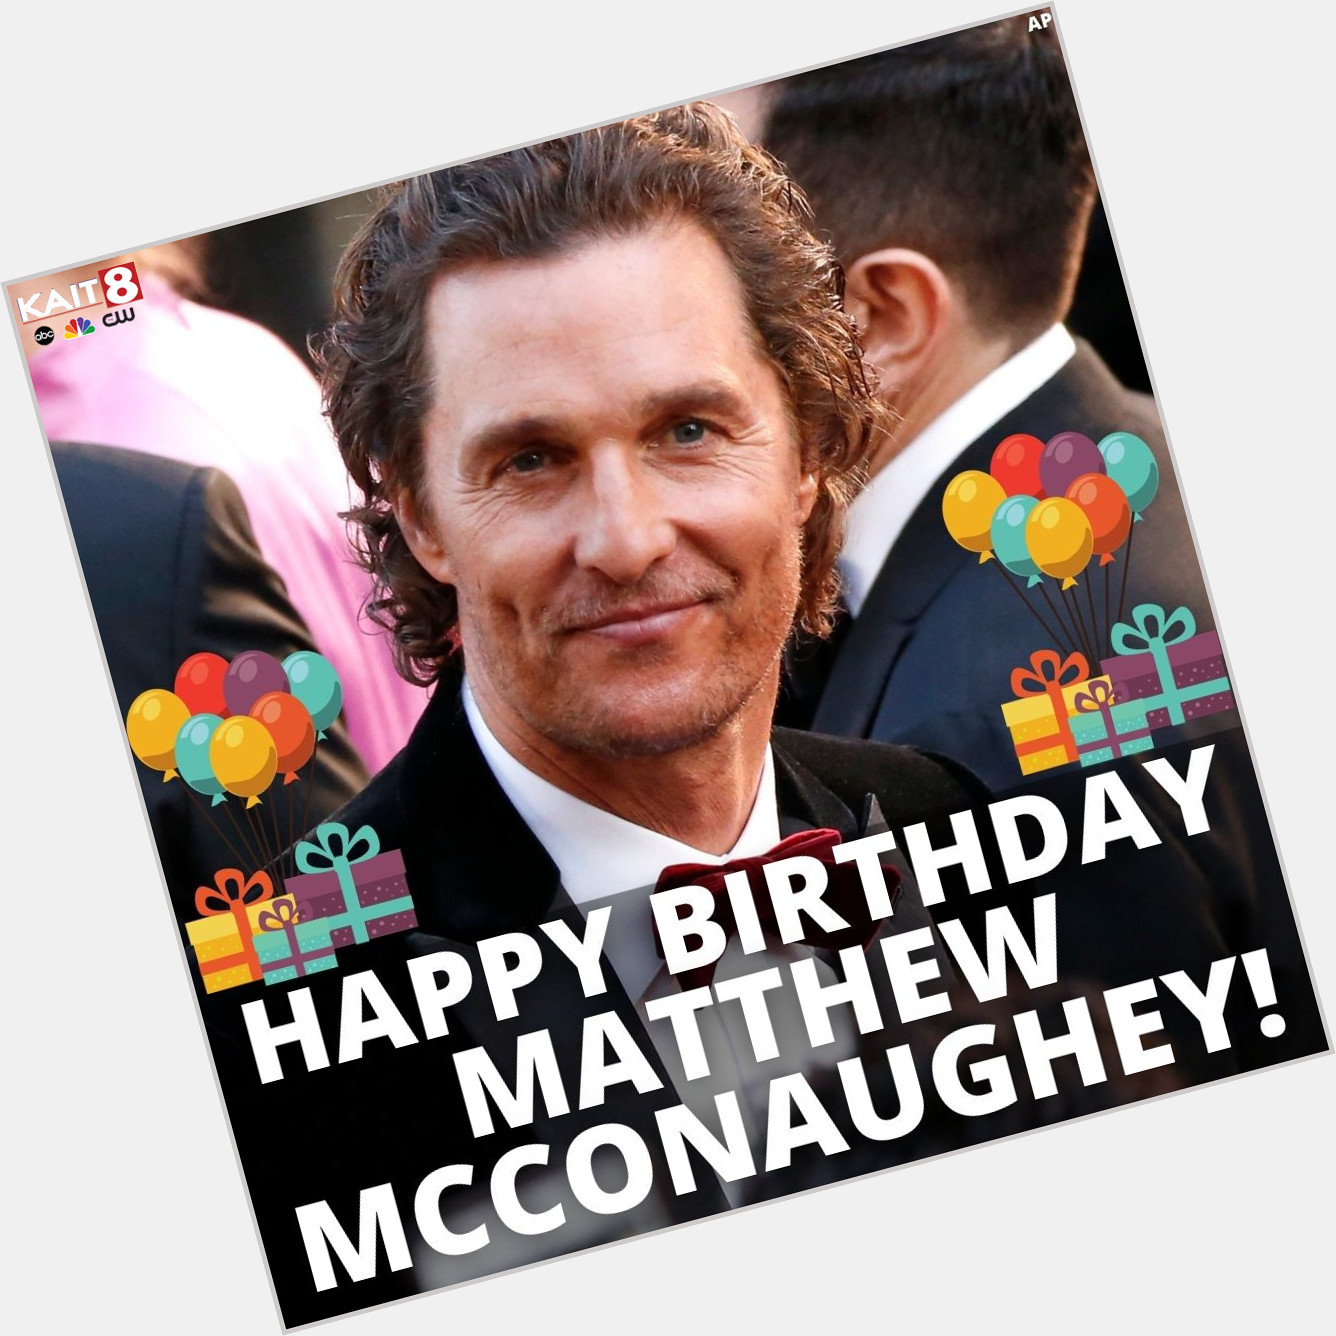 ALRIGHT, ALRIGHT, ALRIGHT! Happy birthday, Matthew McConaughey. He turns 51 today!  